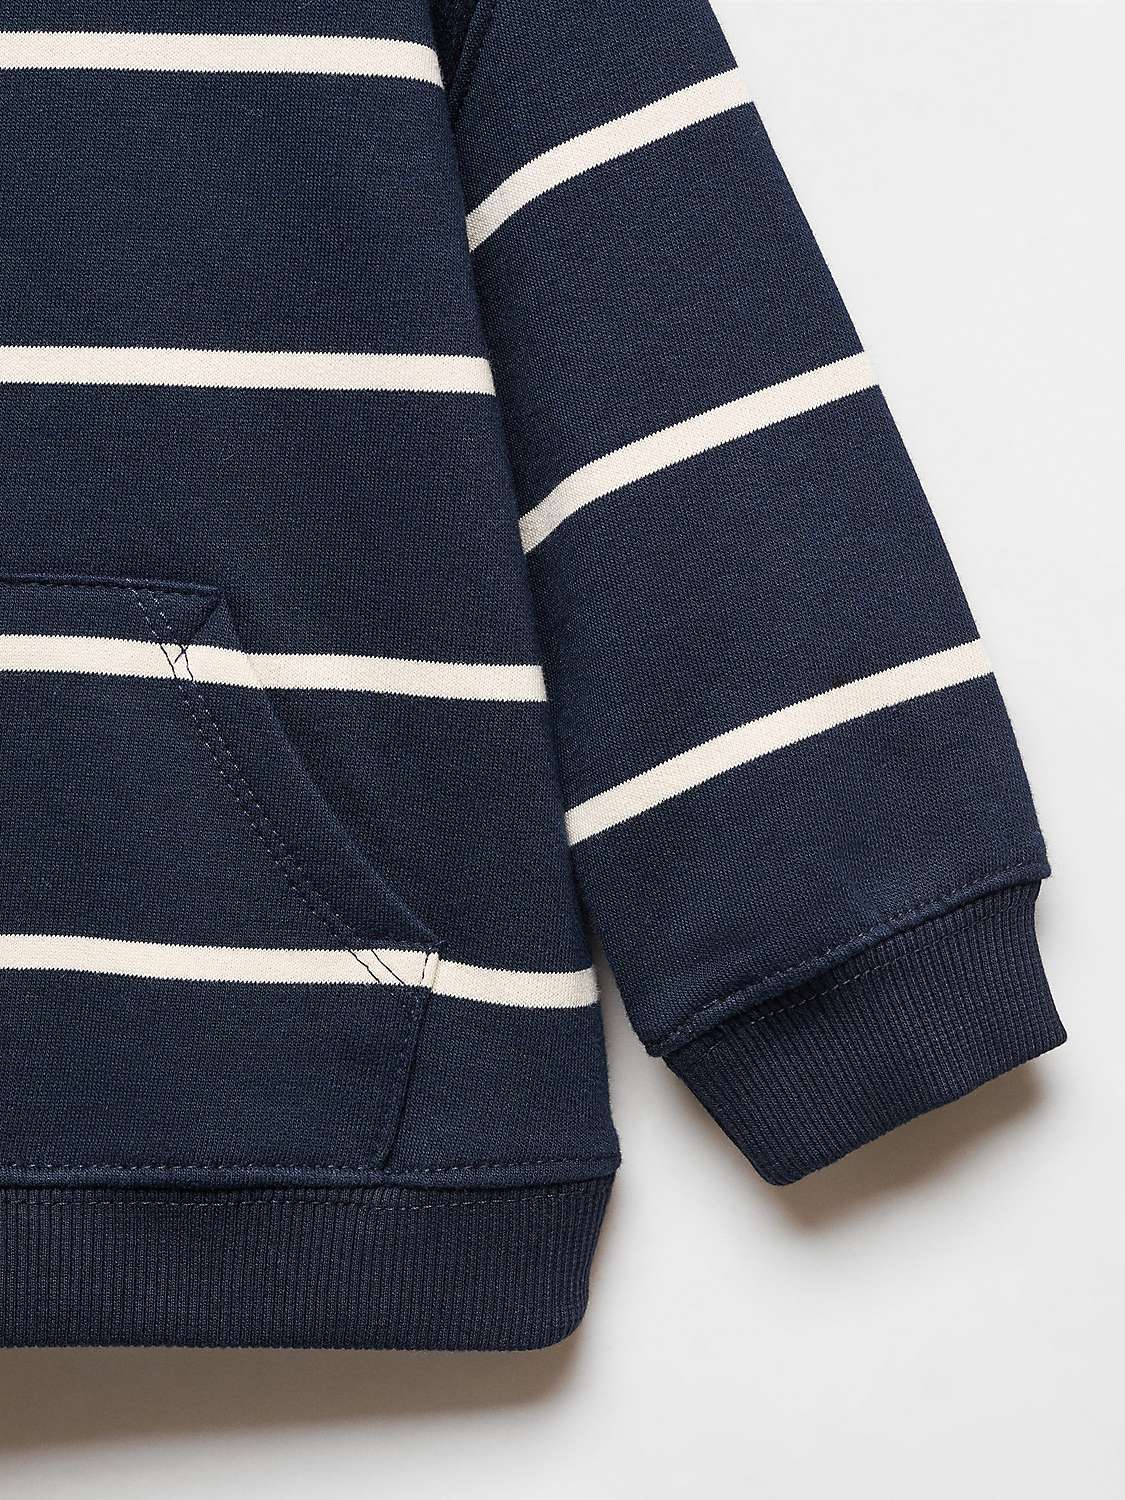 Buy Mango Baby Sea Striped Hooded Sweatshirt, Navy Online at johnlewis.com